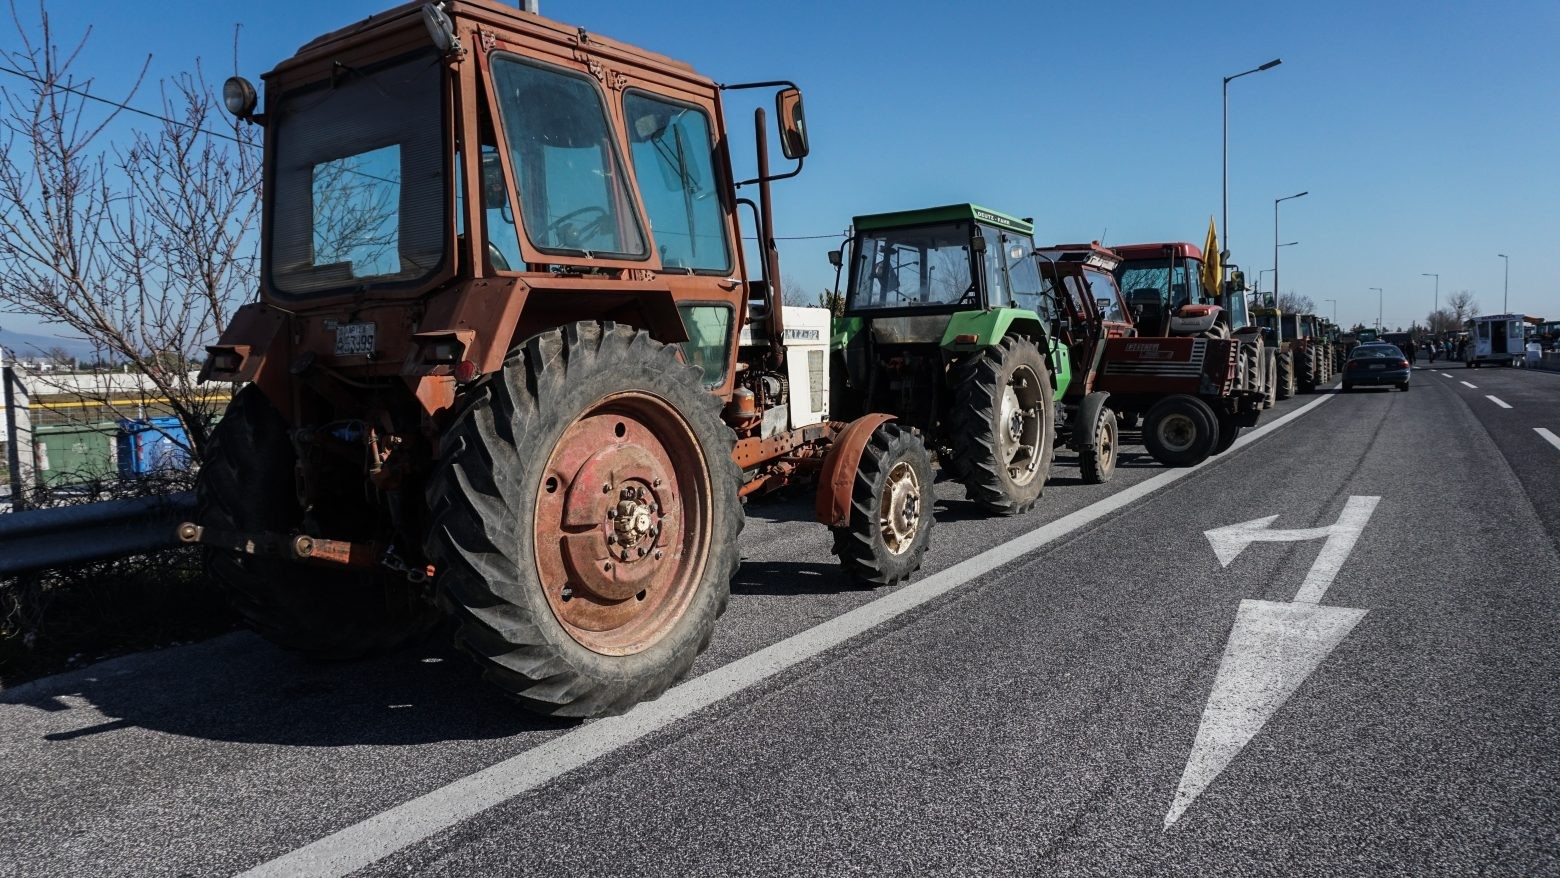 Mπλόκο στο Ζάρκο στήνουν οι τρικαλινοί αγρότες - Τα αιτήματά τους 